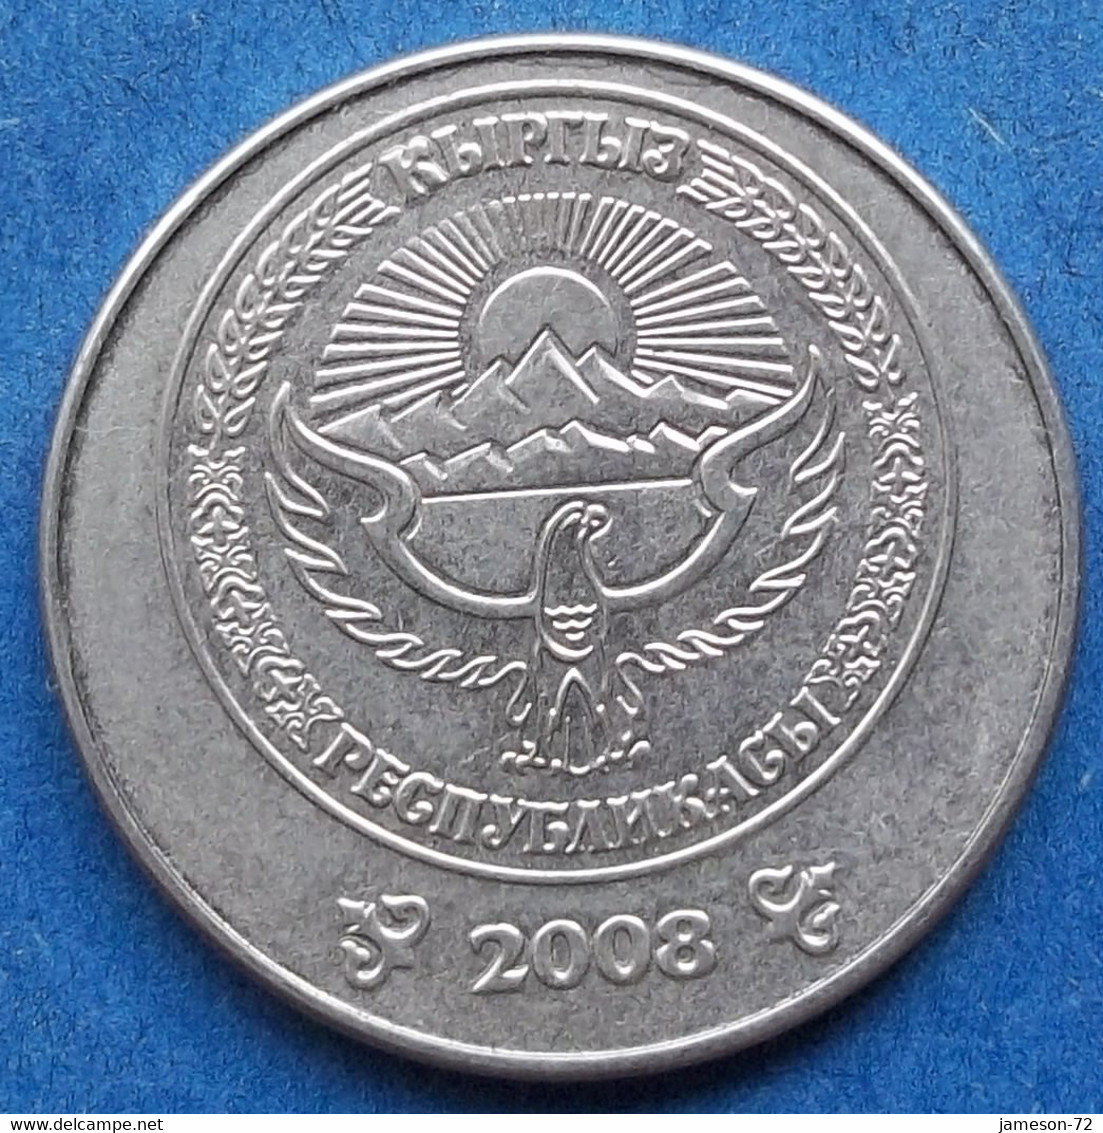 KYRGYZSTAN - 3 Som 2008 KM# 15 Independent Republic (1991) - Edelweiss Coins - Kyrgyzstan